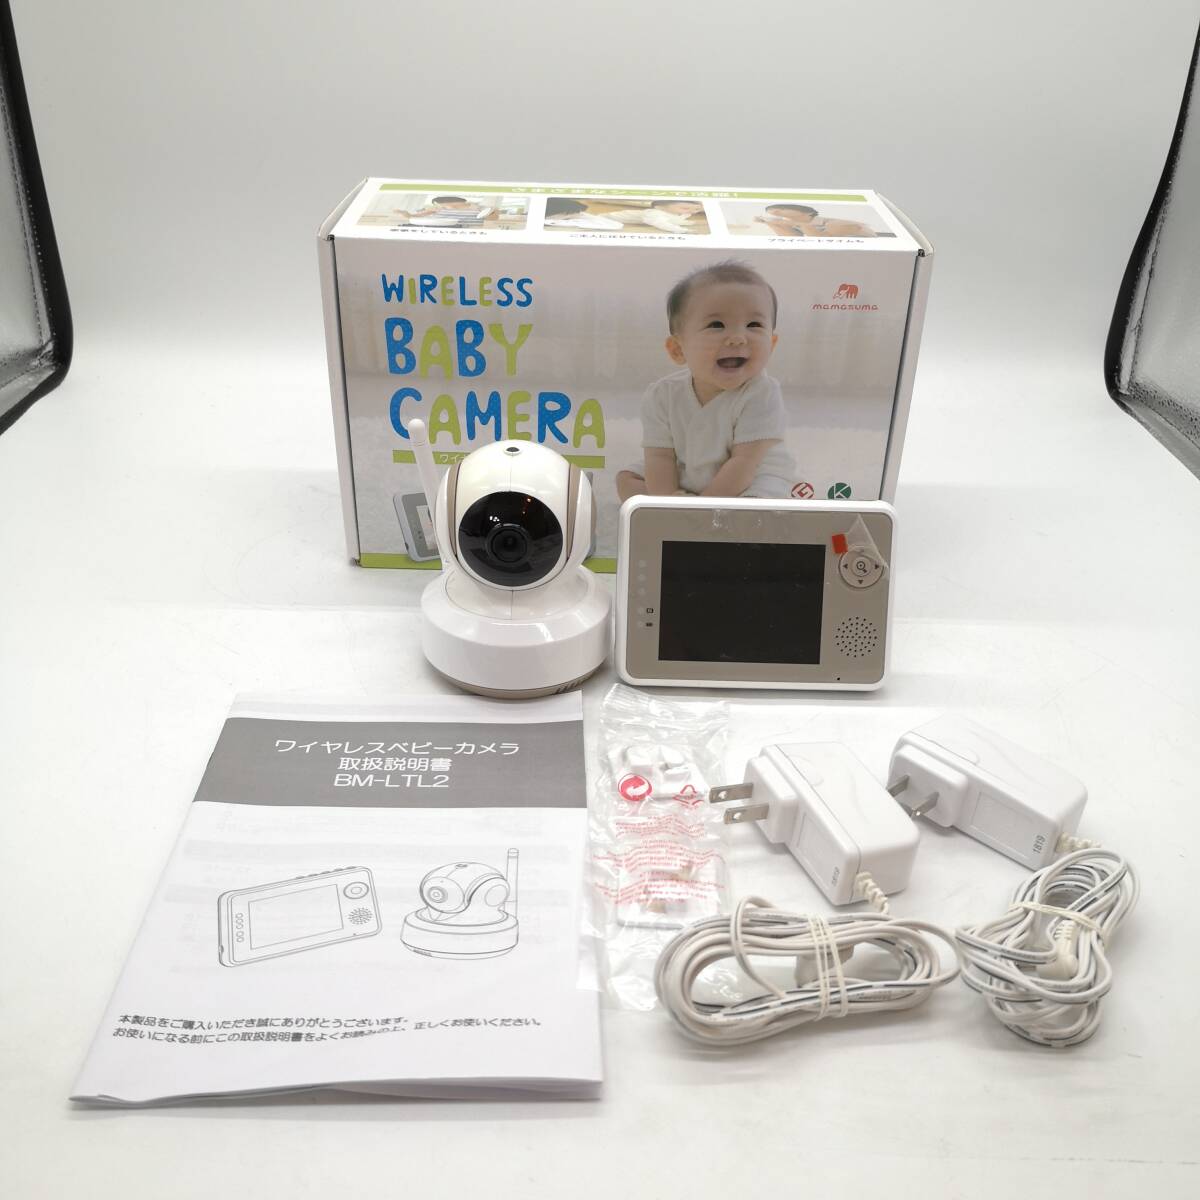  беспроводной baby камера (BM-LTL2) авто тигр  King функция / камера .. функционирование /2way/ voice 202403-F442